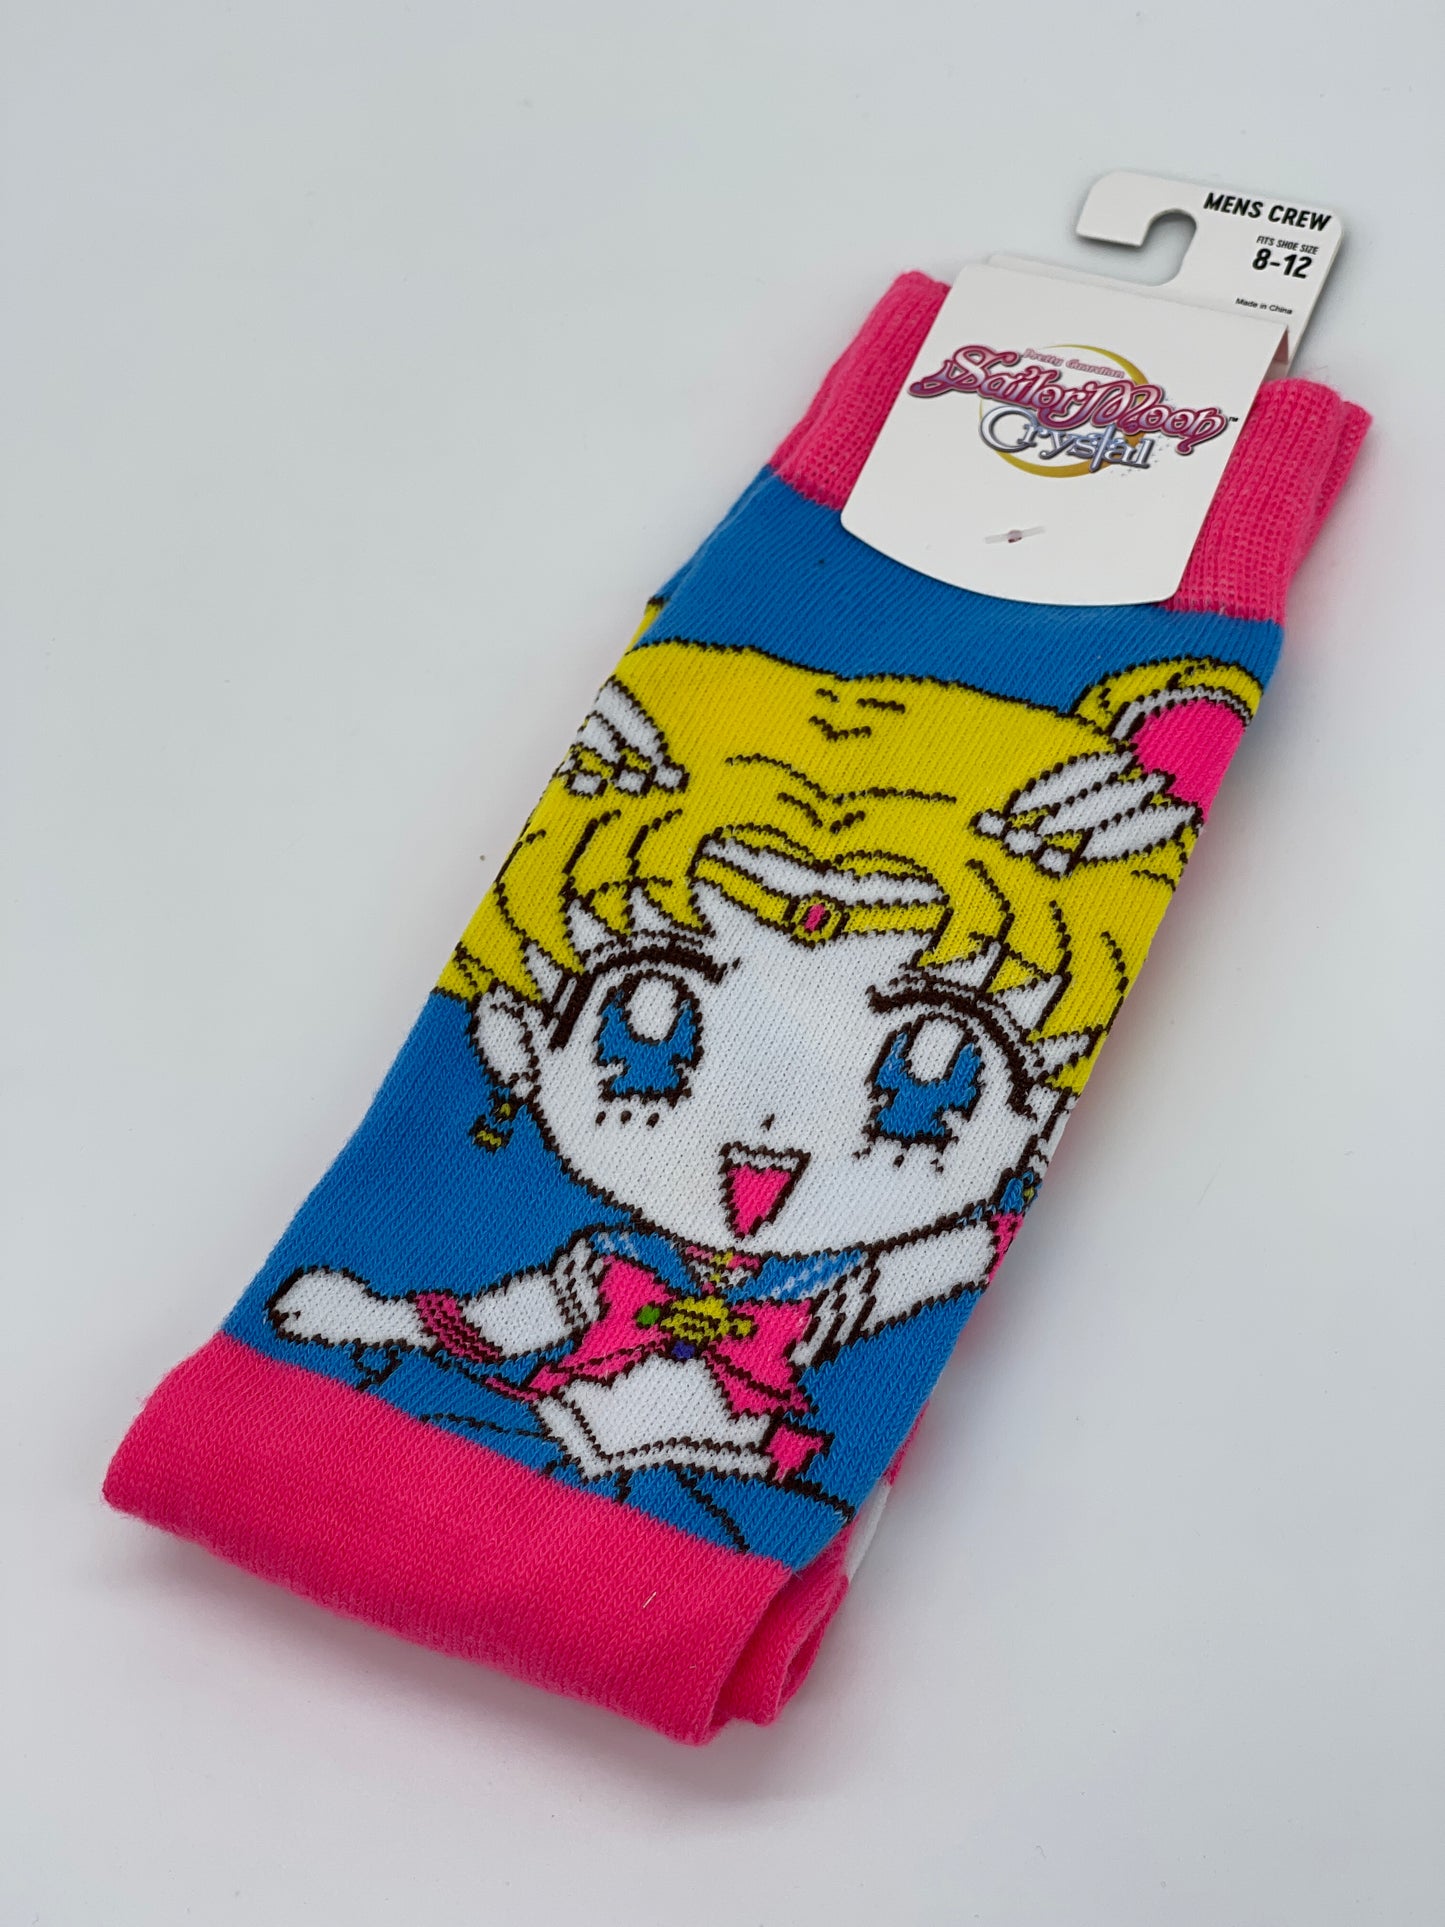 Pretty Guardian Sailor Moon "Socken" Crystal Größe 8-12